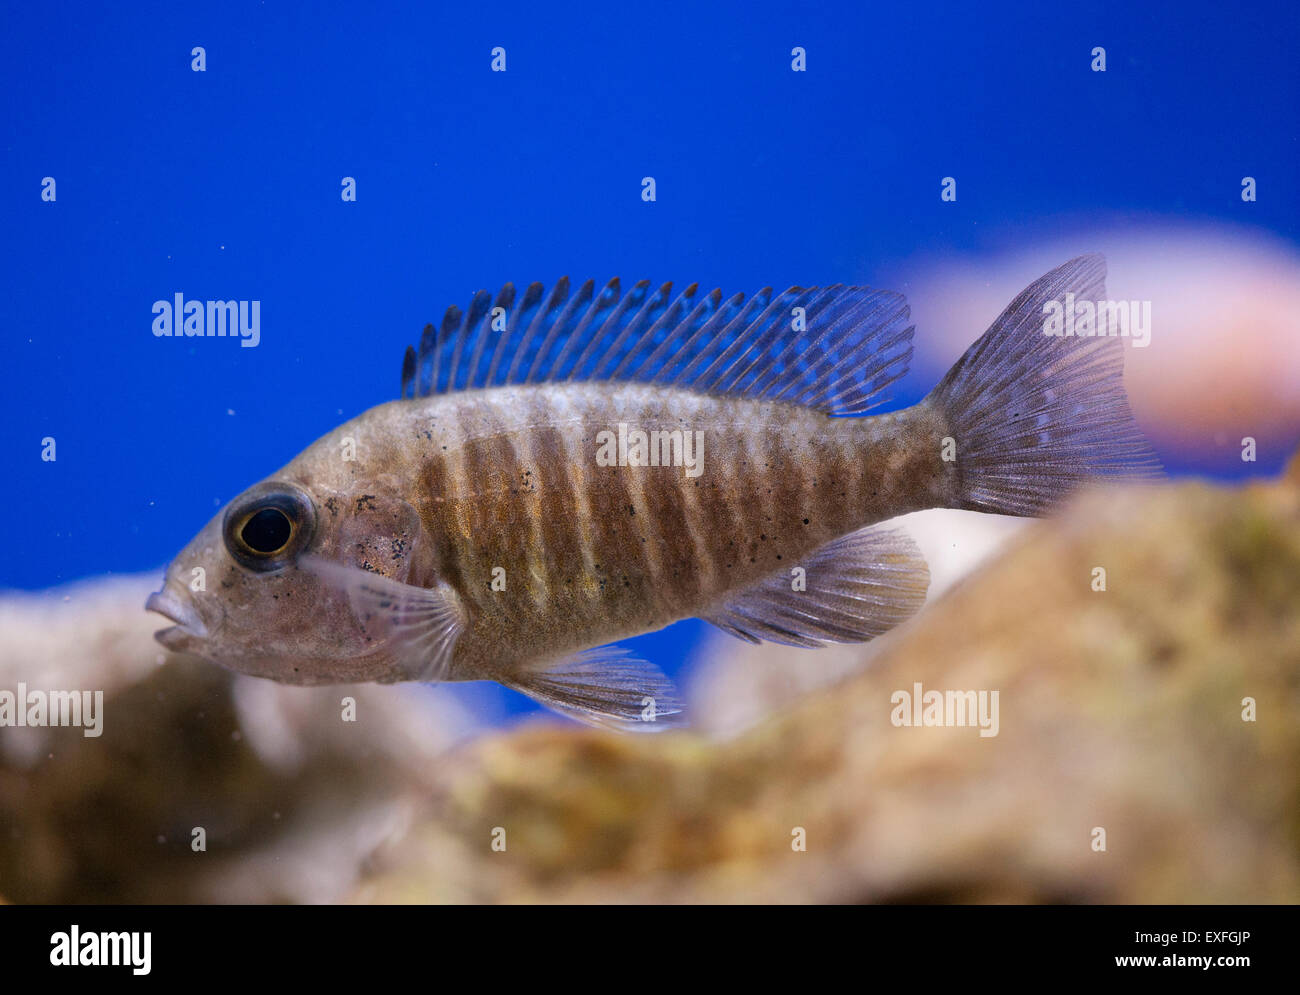 African rift lake cichlid fish Single adult in an aquarium Stock Photo